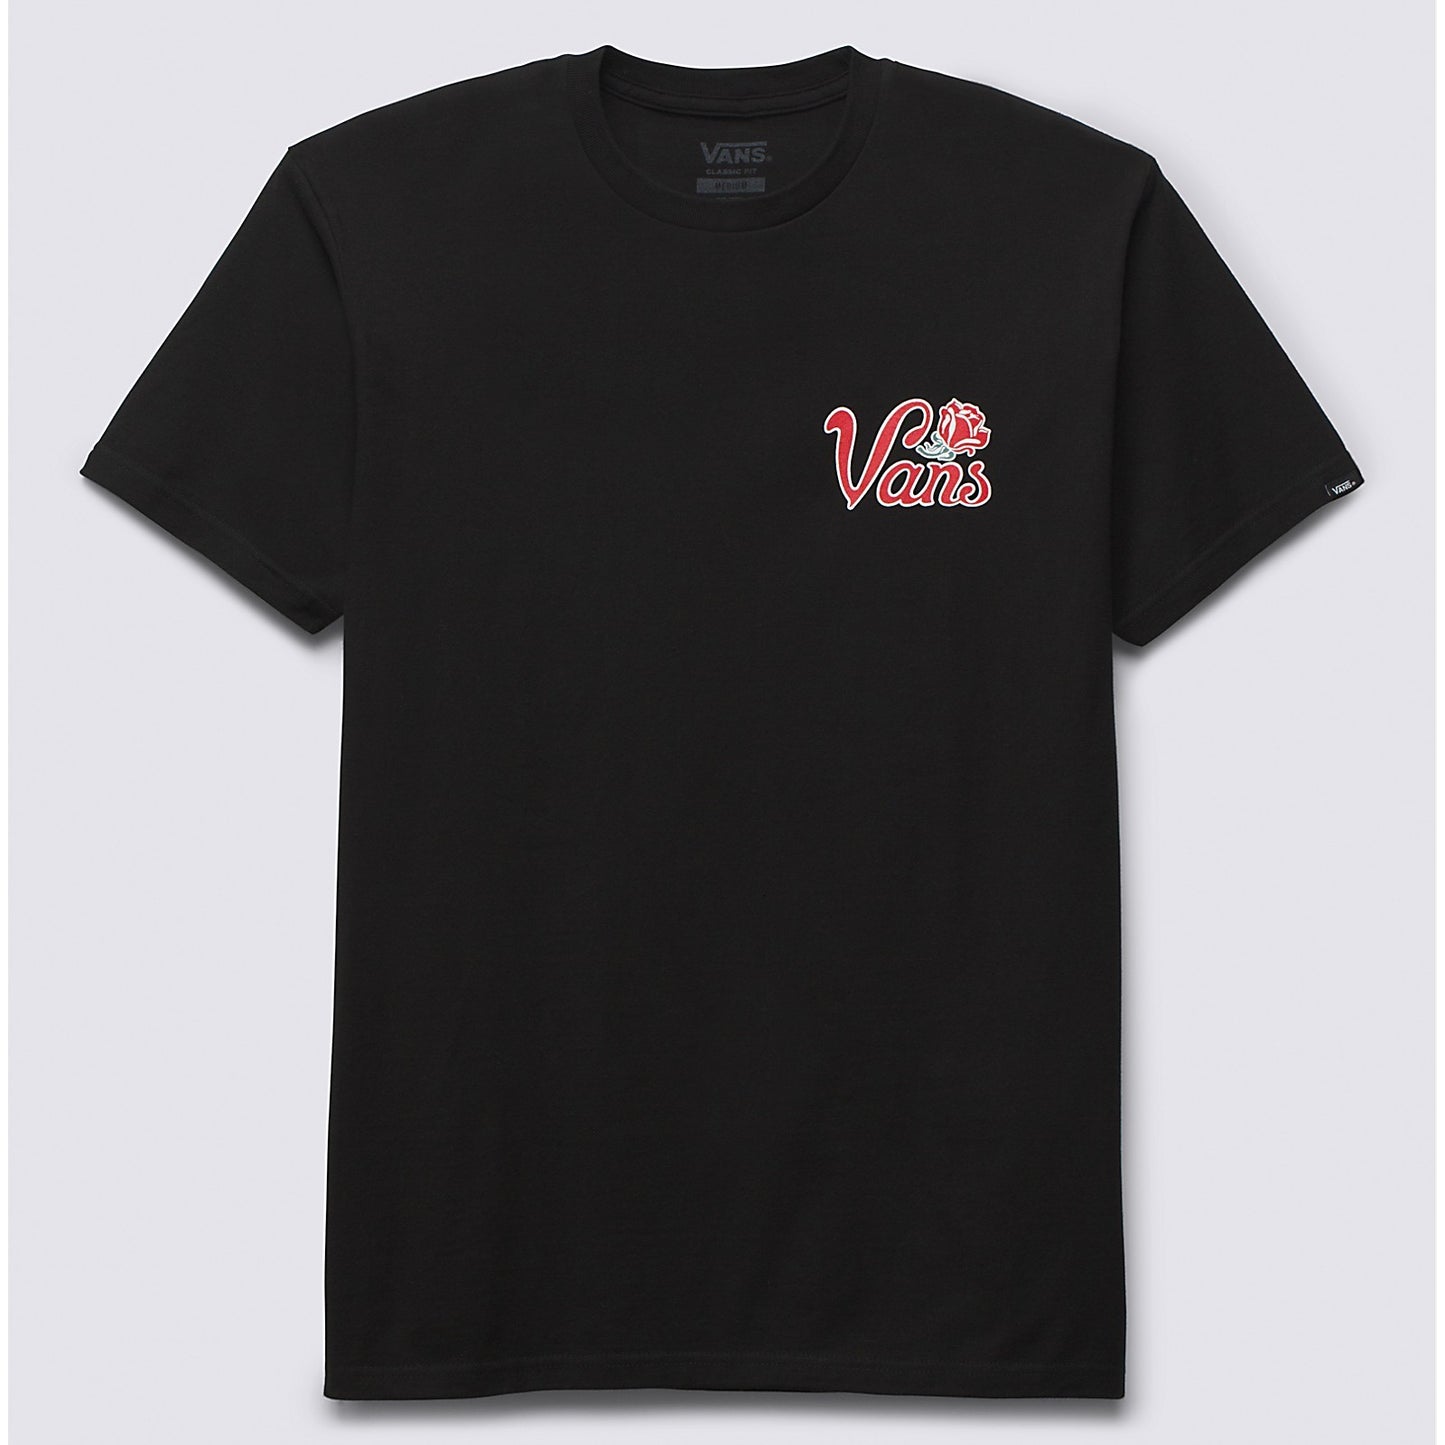 VANS Pasa T-Shirt - Black